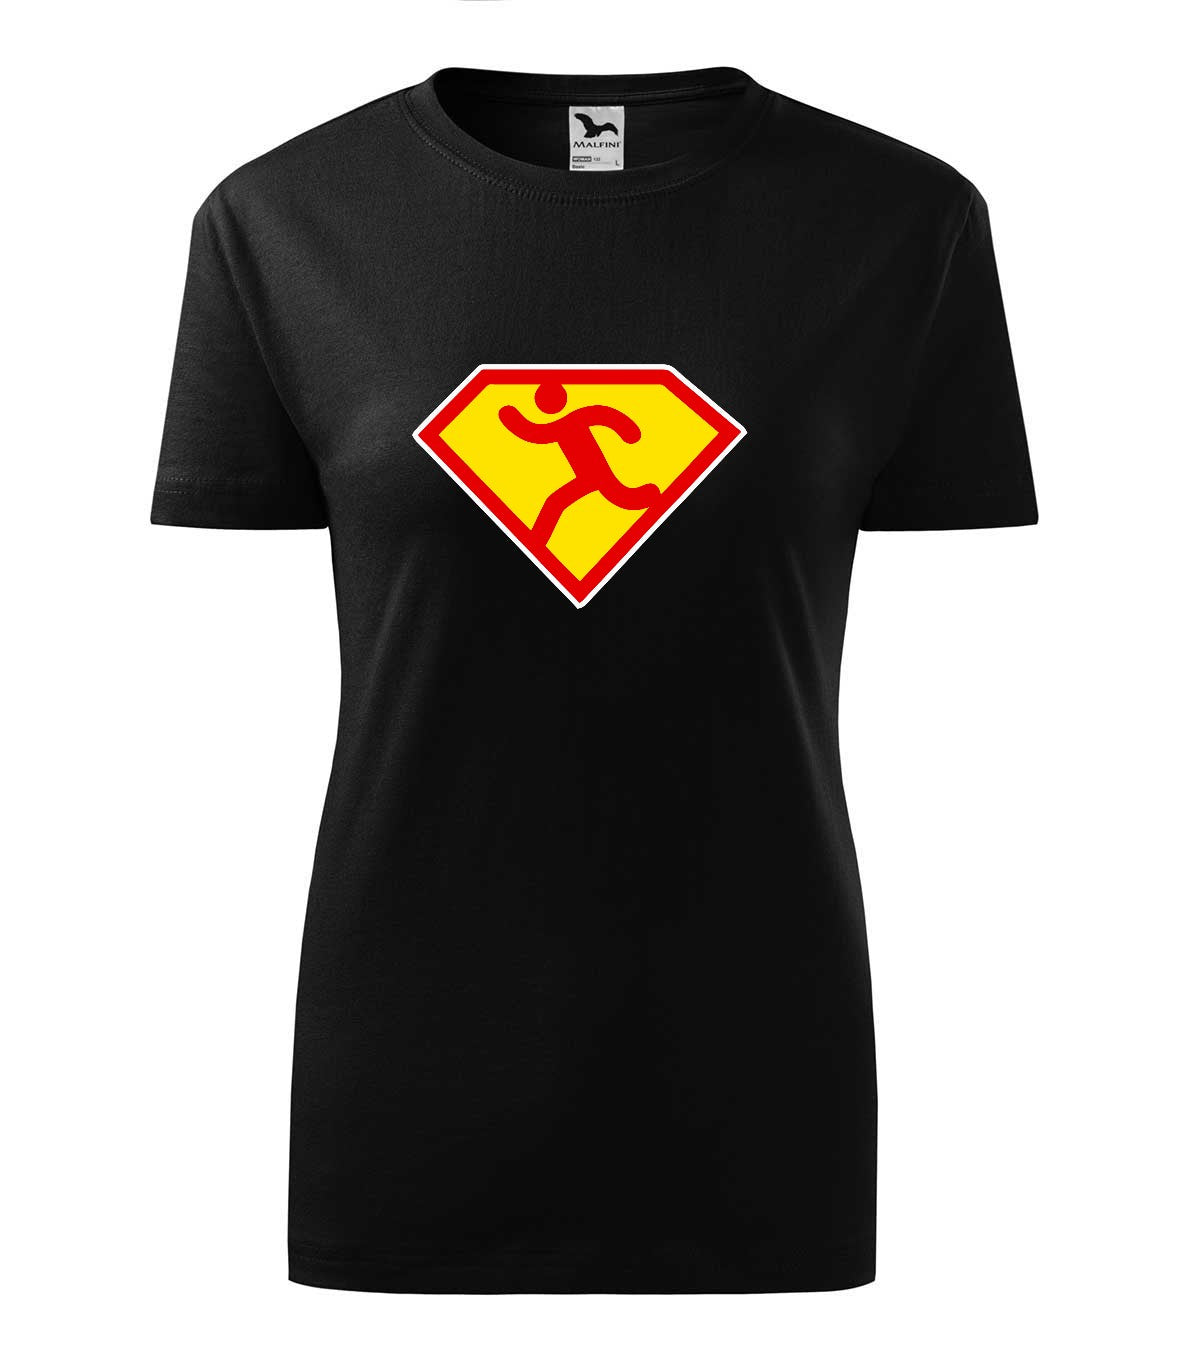 Superrunner női technikai póló